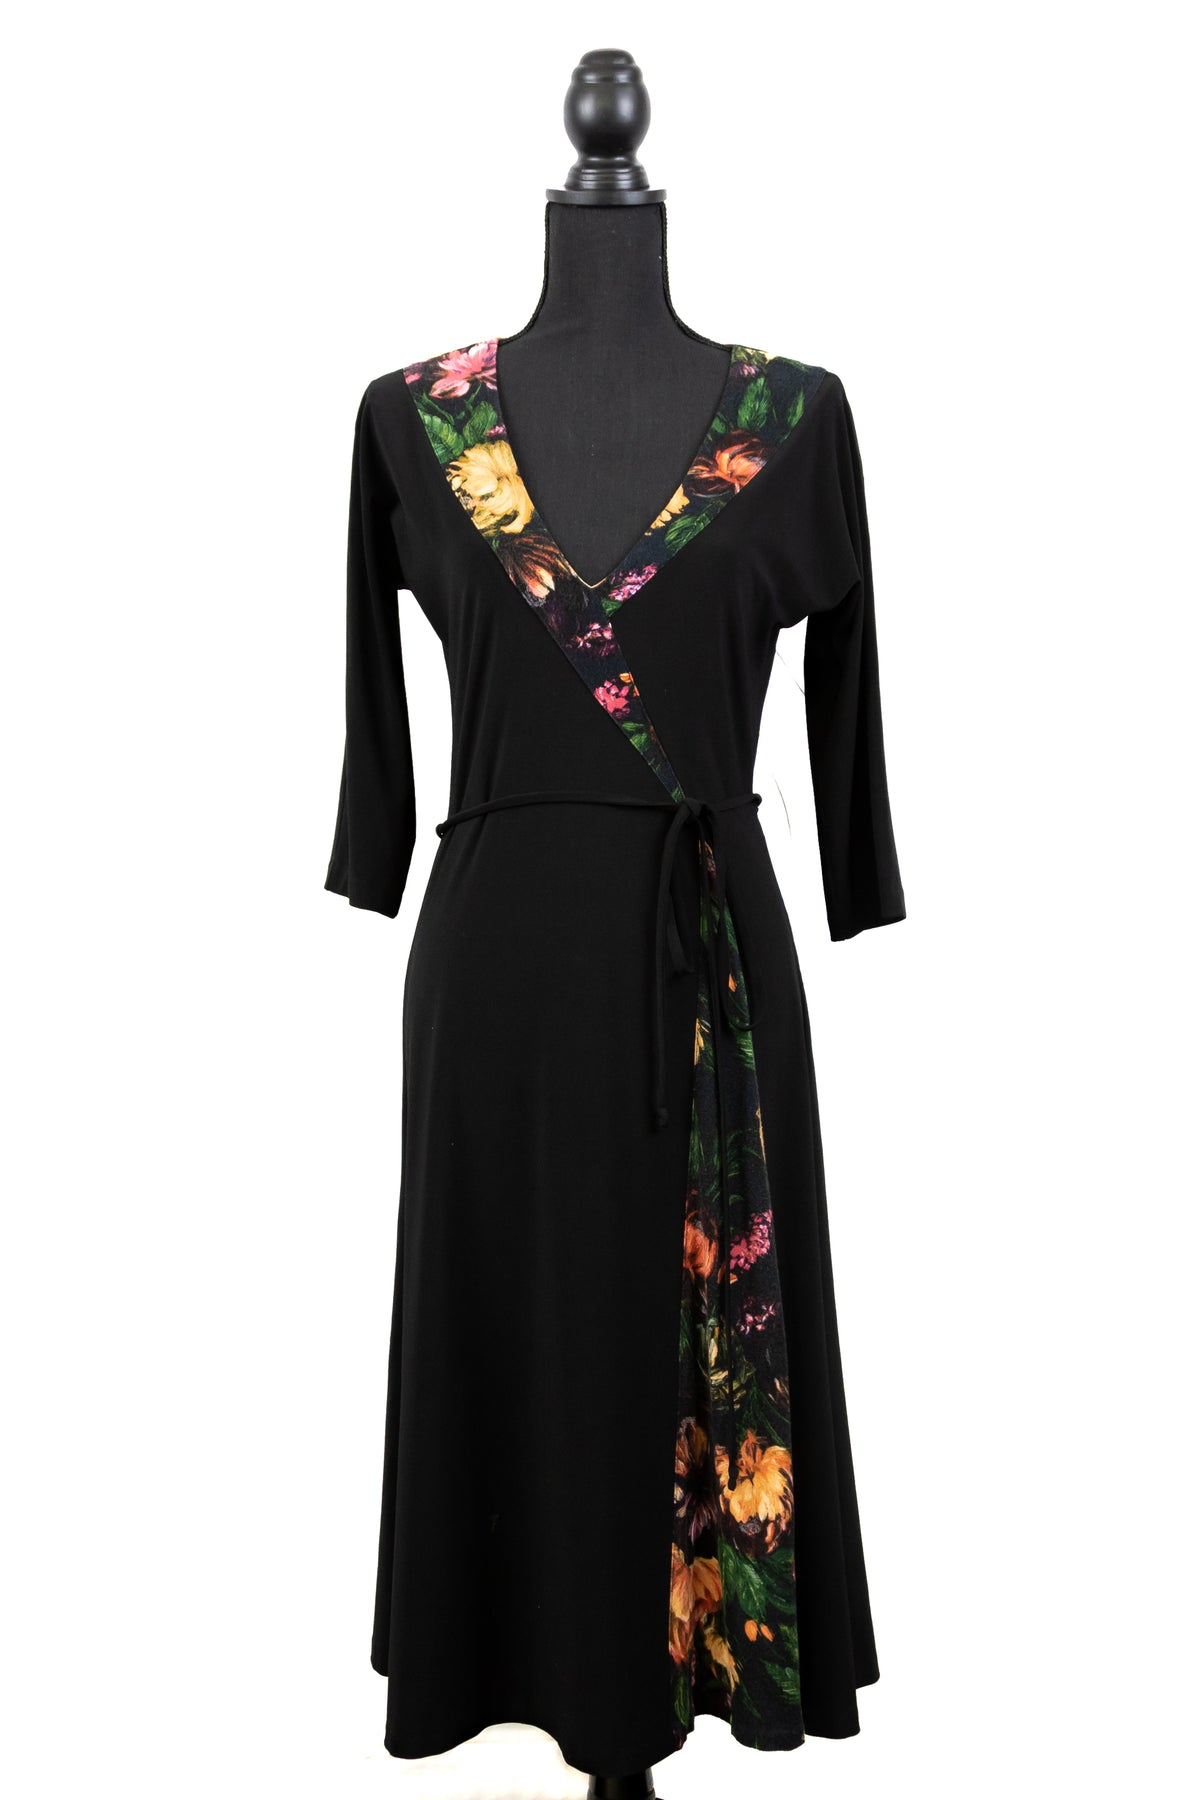 Black Floral Jersey Knit Dress As Seen on Lorelai - Size M